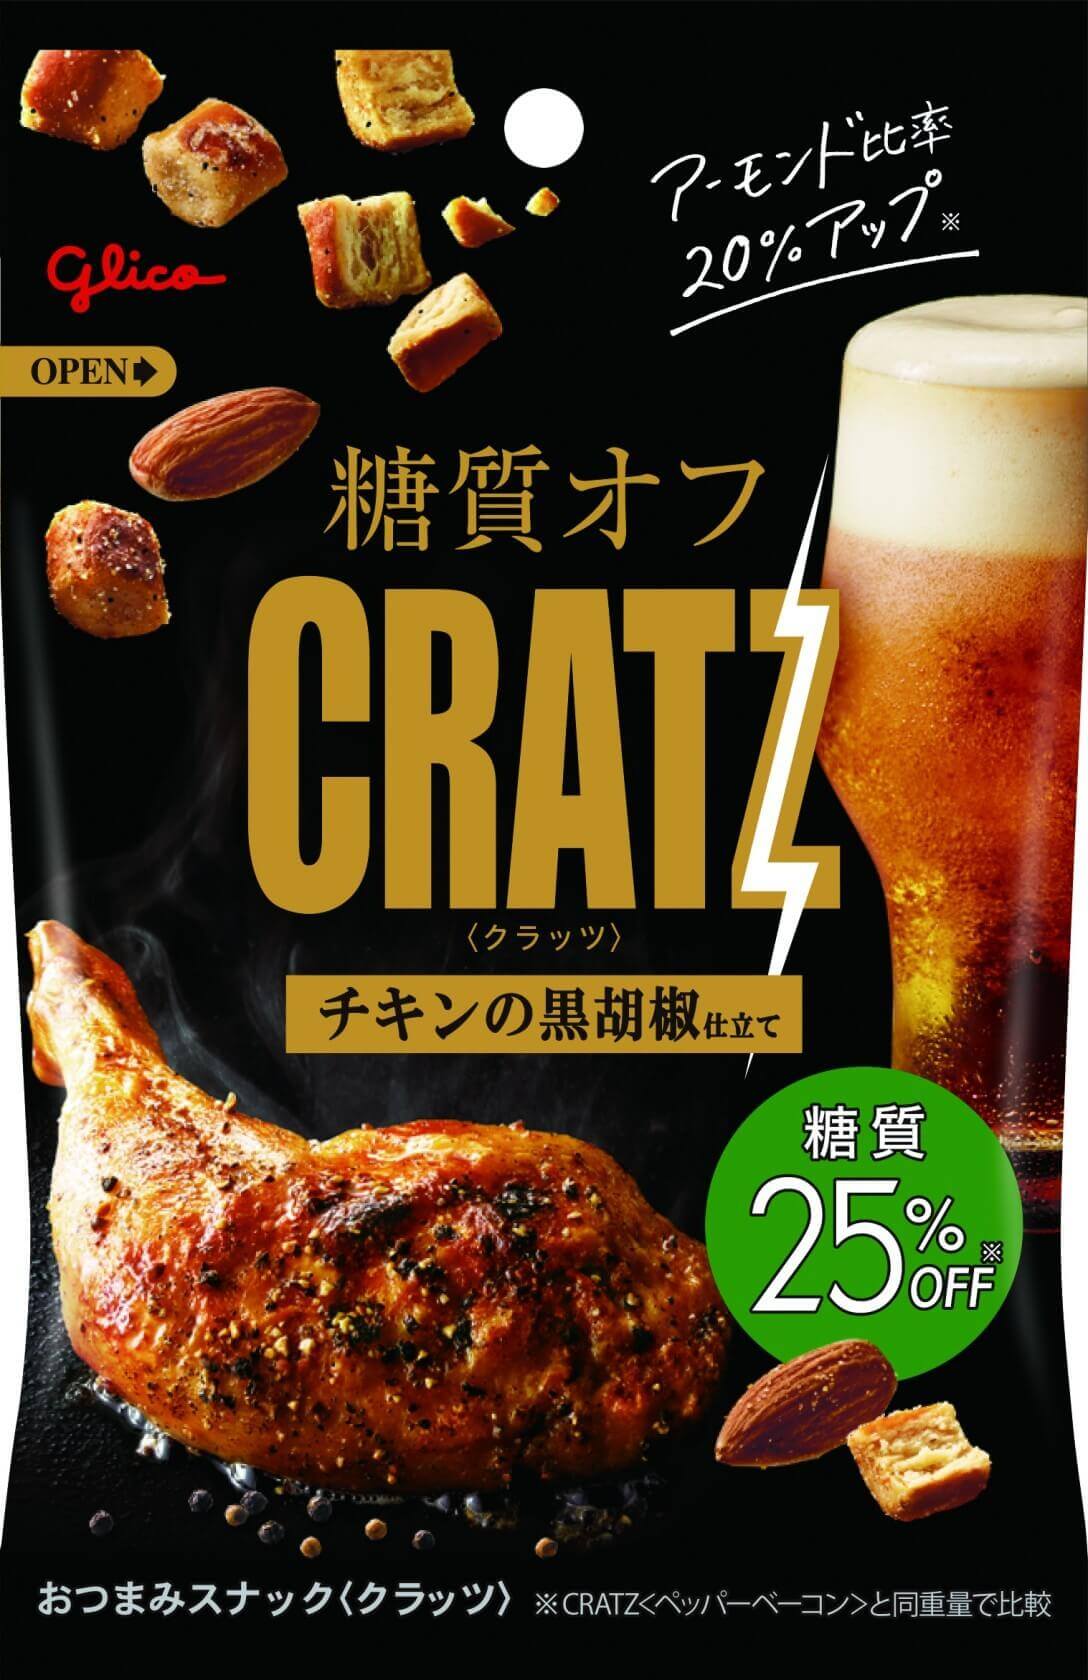 Glico Cratz - Black Pepper Chicken